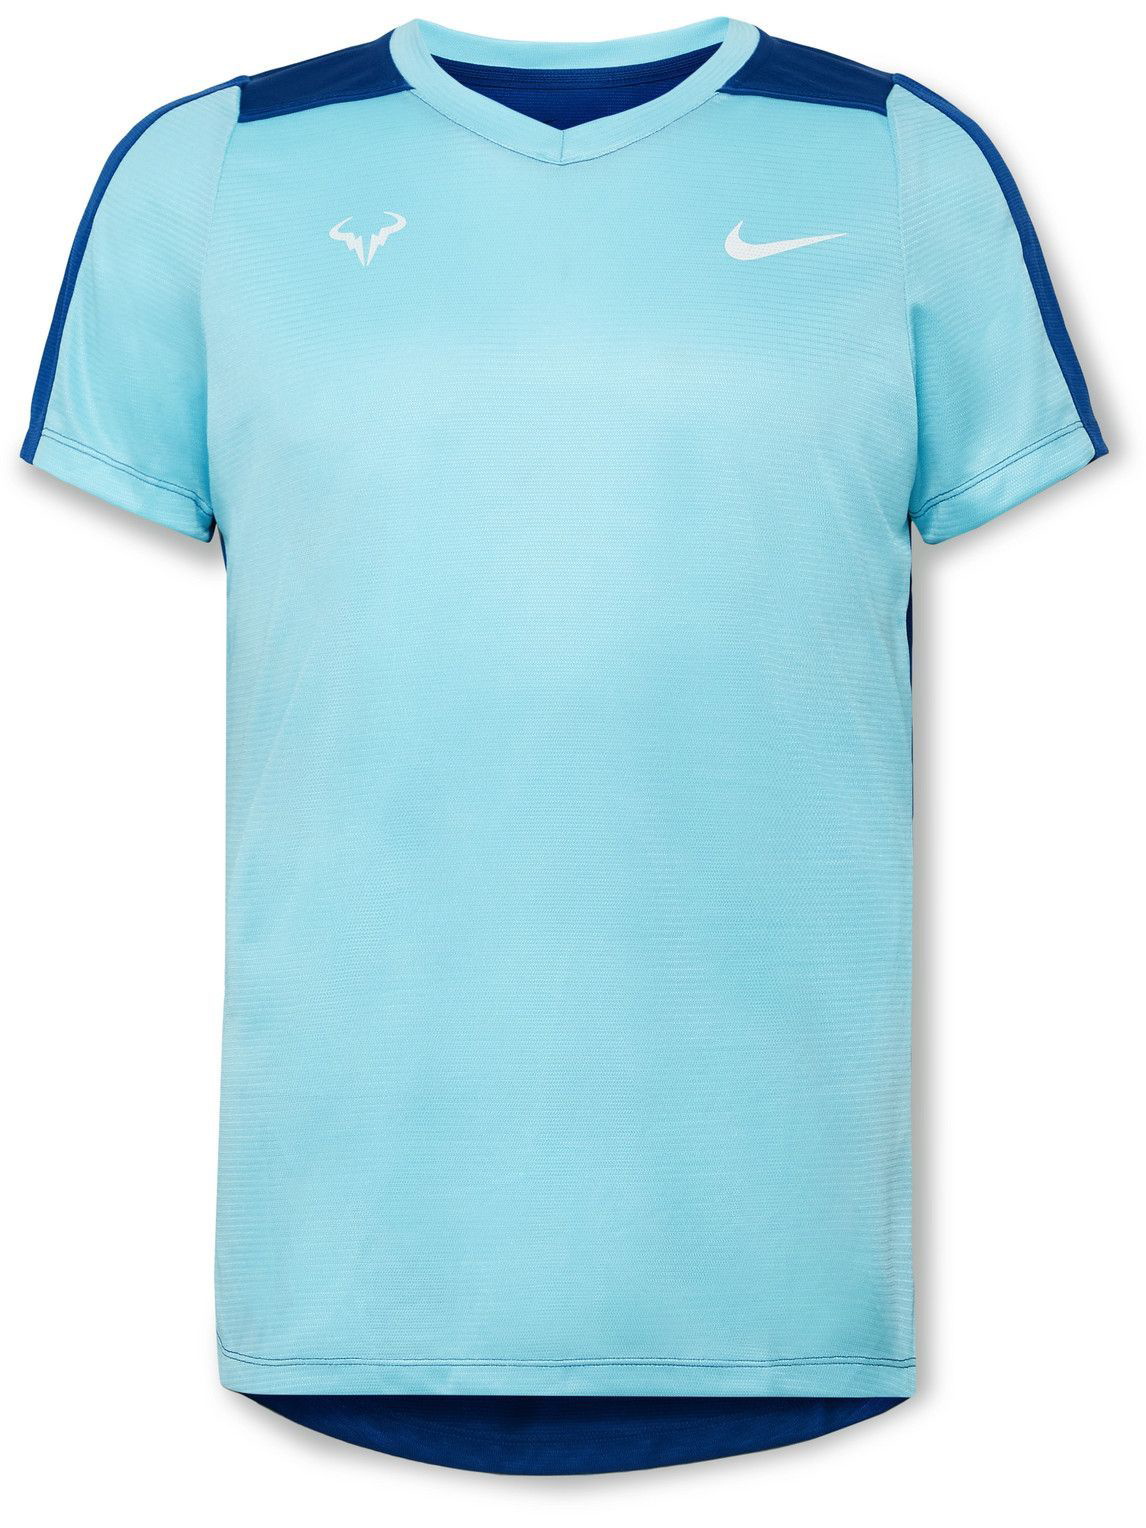 Barry kedel Afvige Nike Tennis - Rafa Challenger Dri-FIT Tennis T-Shirt - Blue Nike Tennis